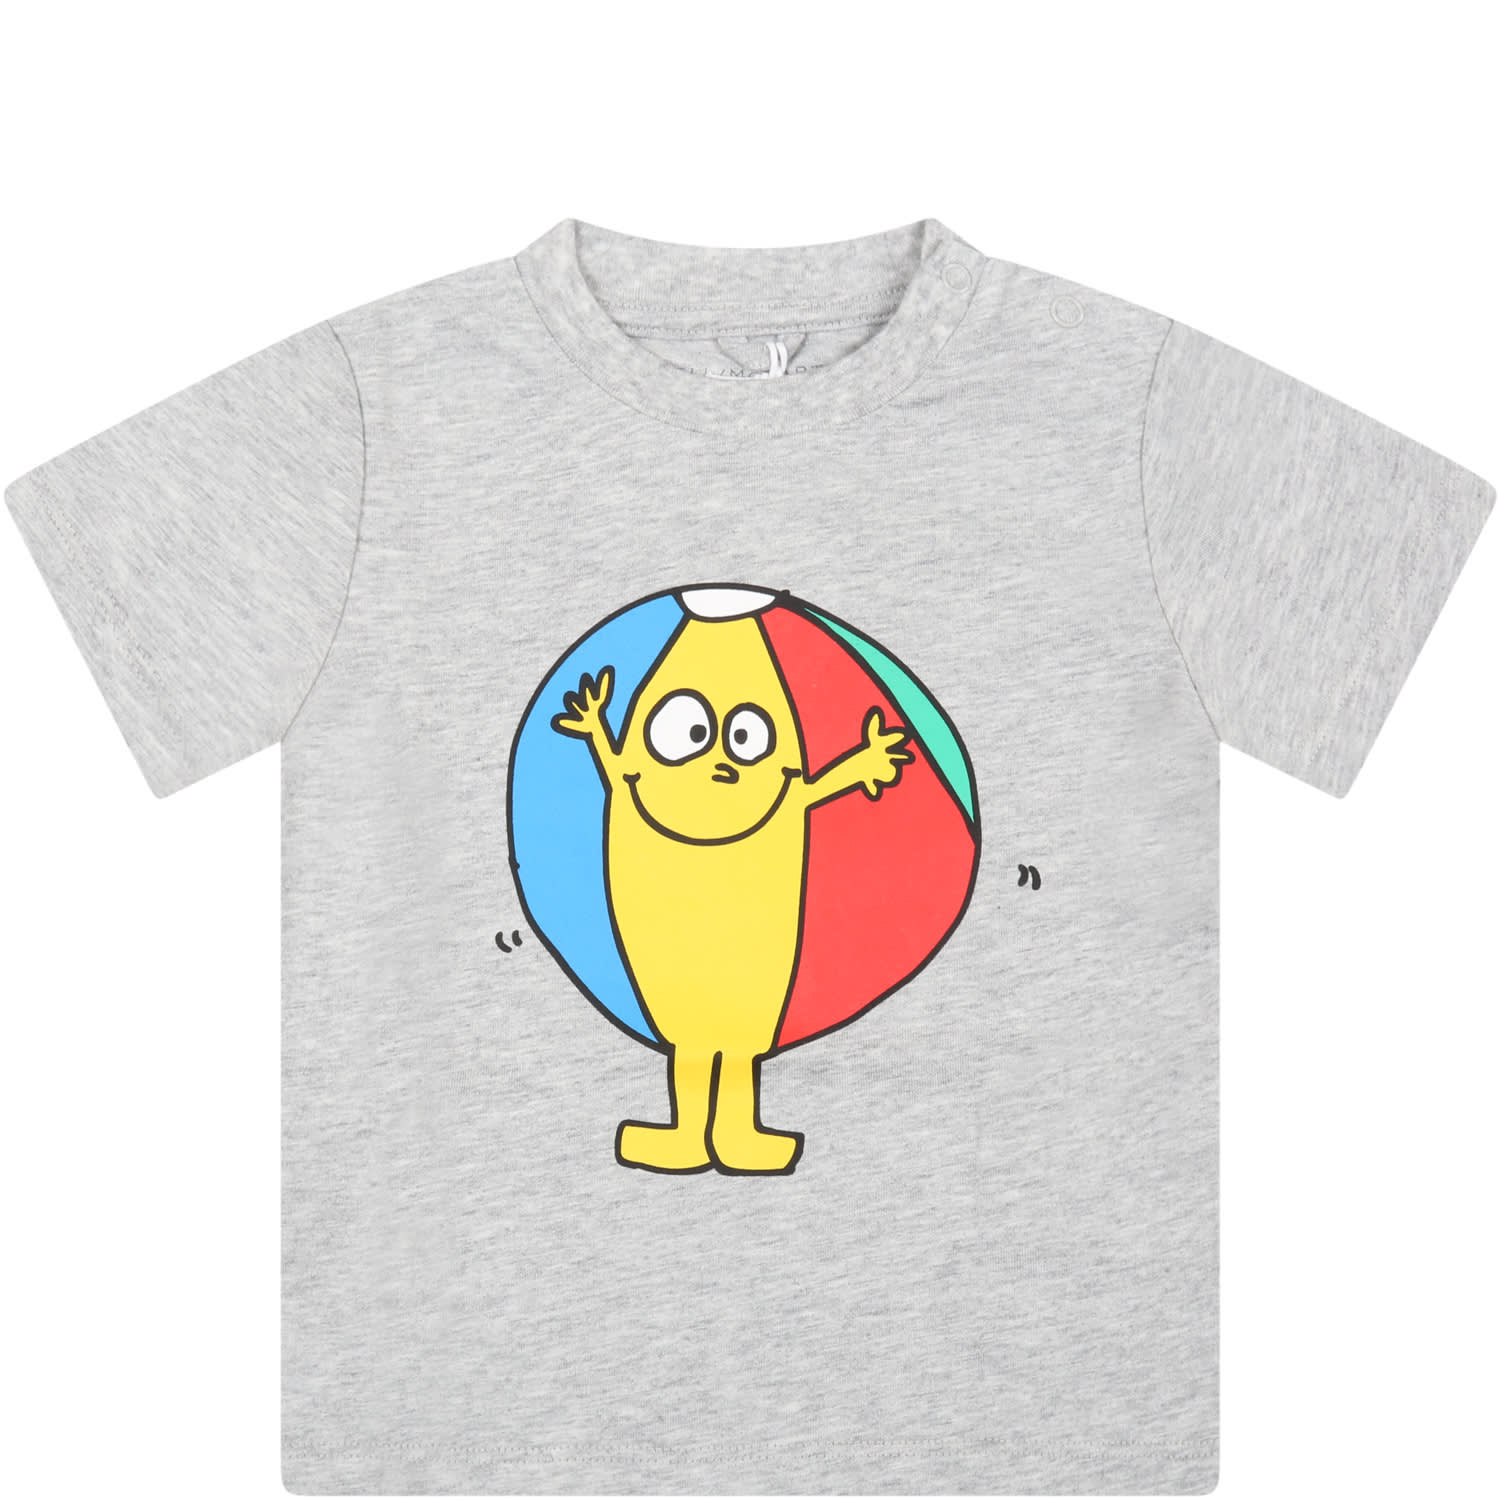 Stella McCartney Kids Grey T-shirt For Baby Boy With Balloon